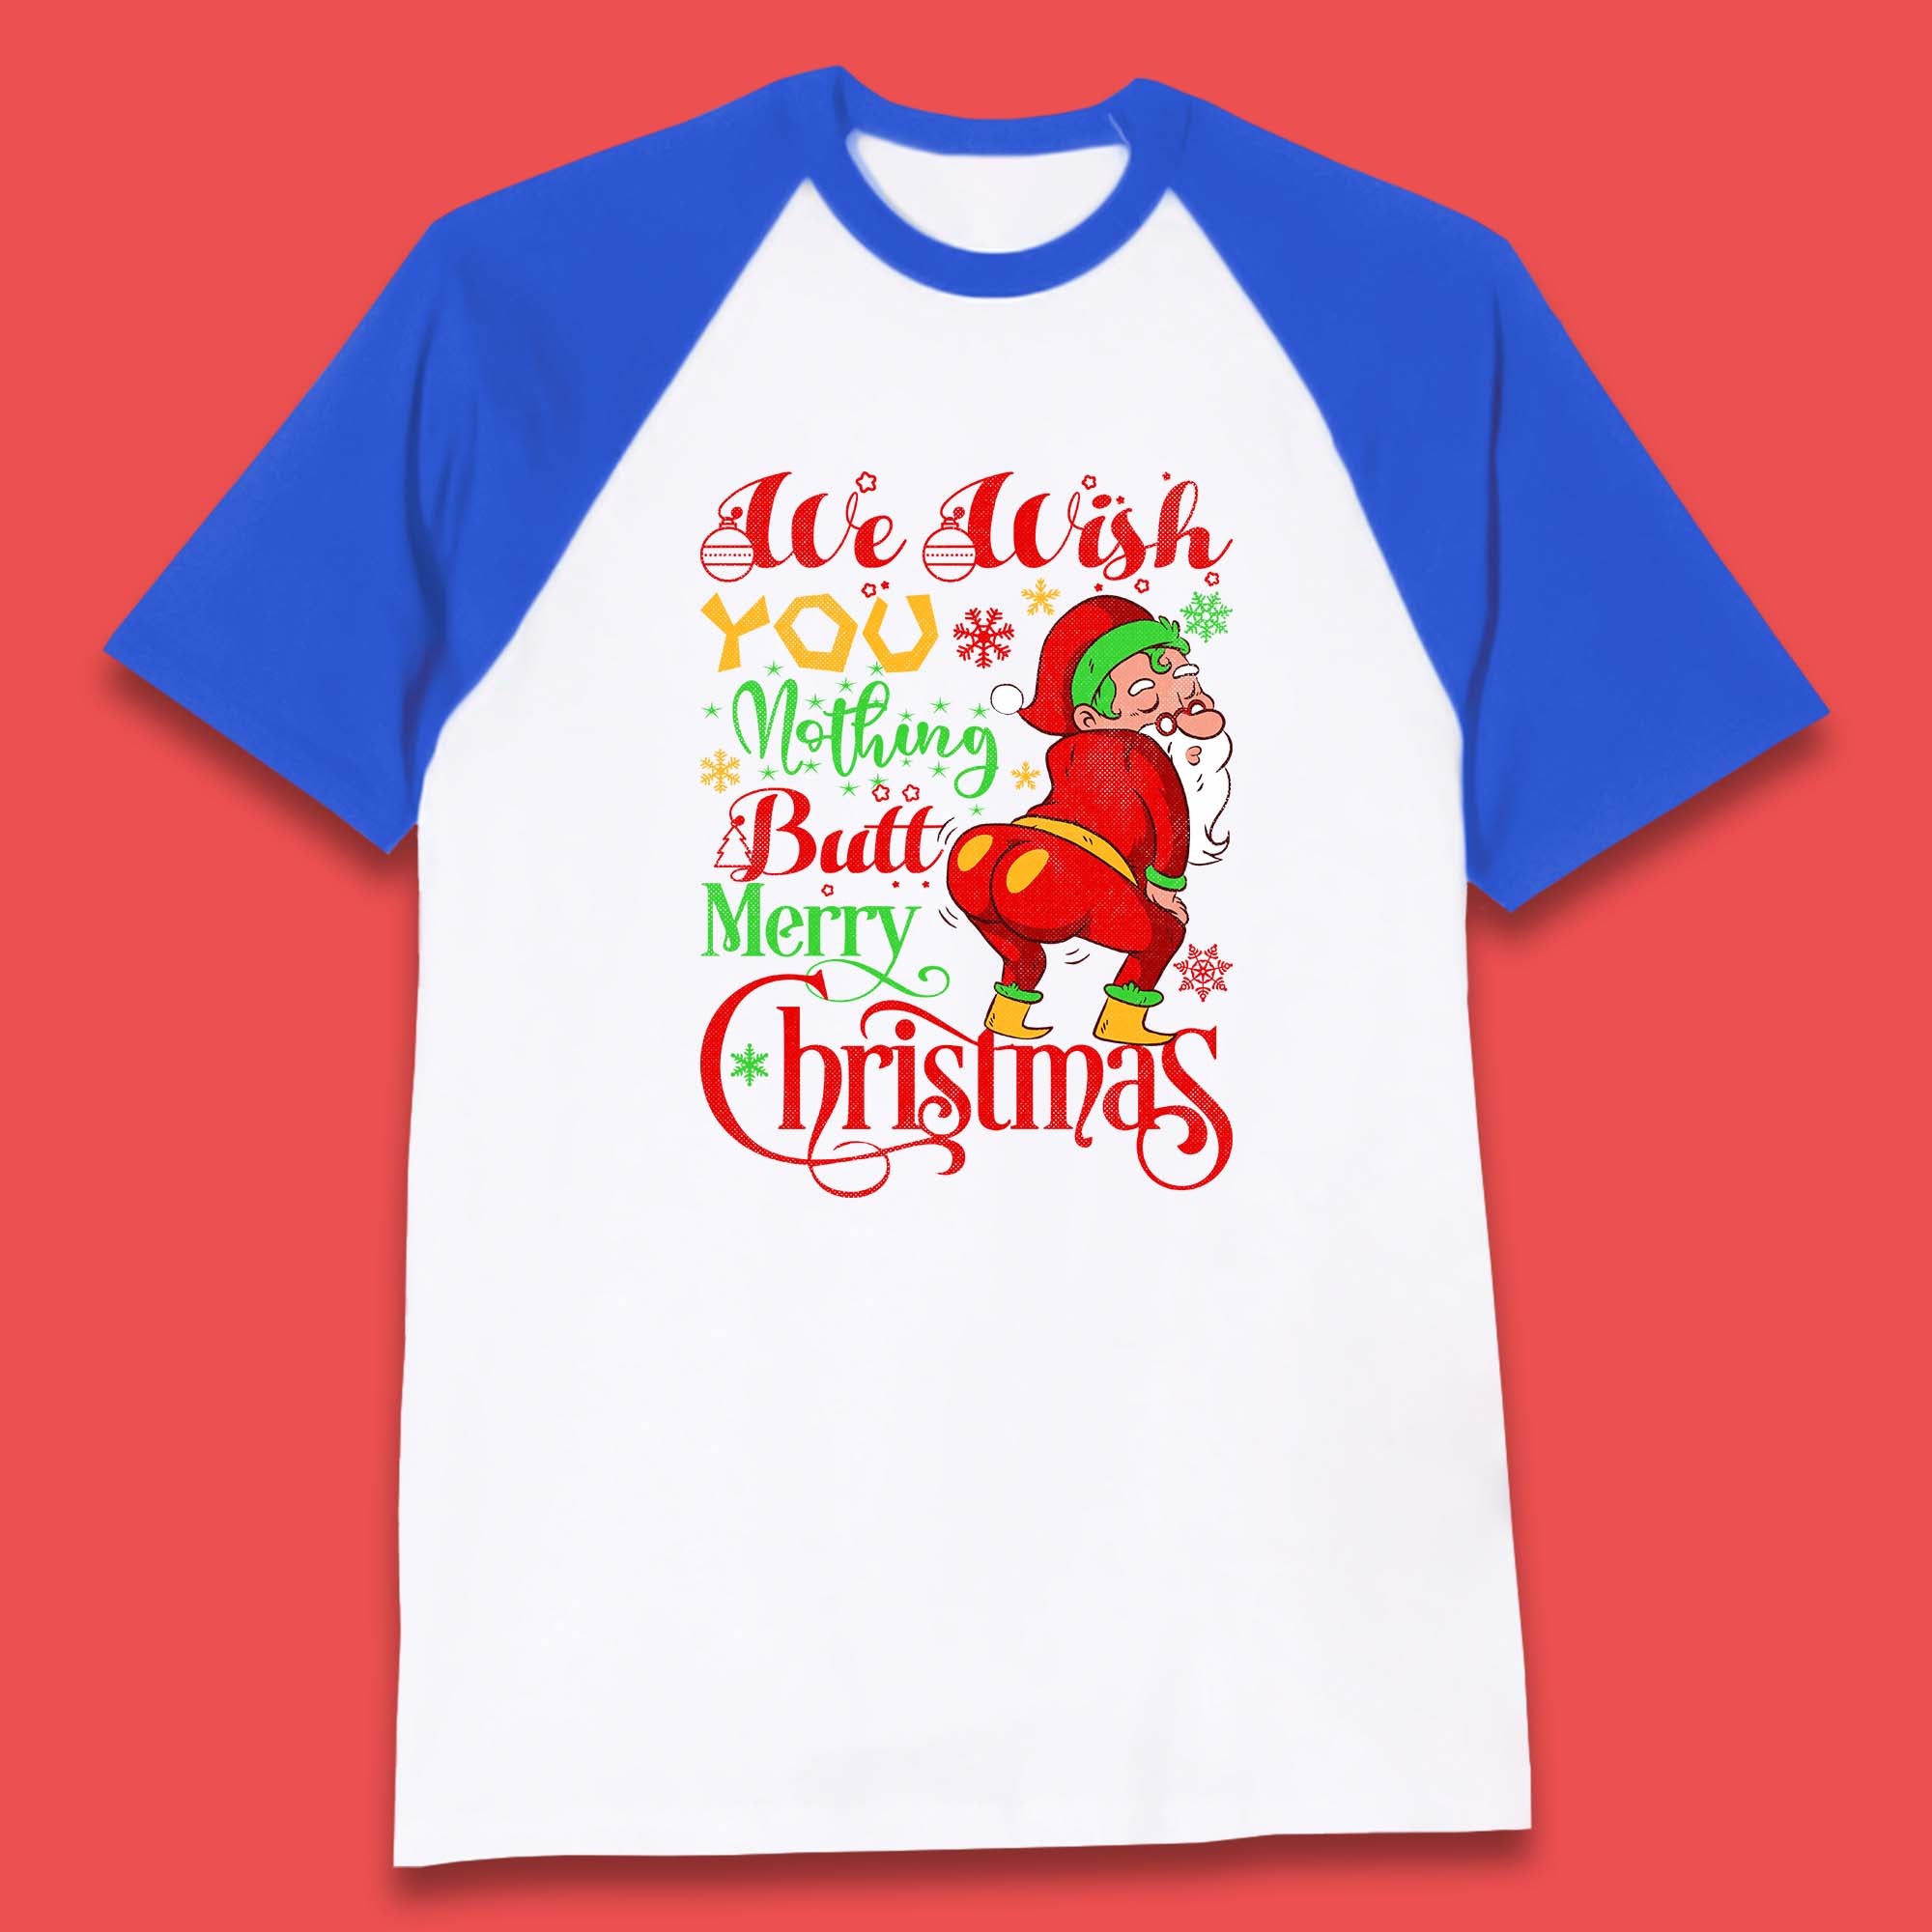 We Wish You Nothing Butt Merry Christmas Funny Naughty Santa Claus Xmas Baseball T Shirt